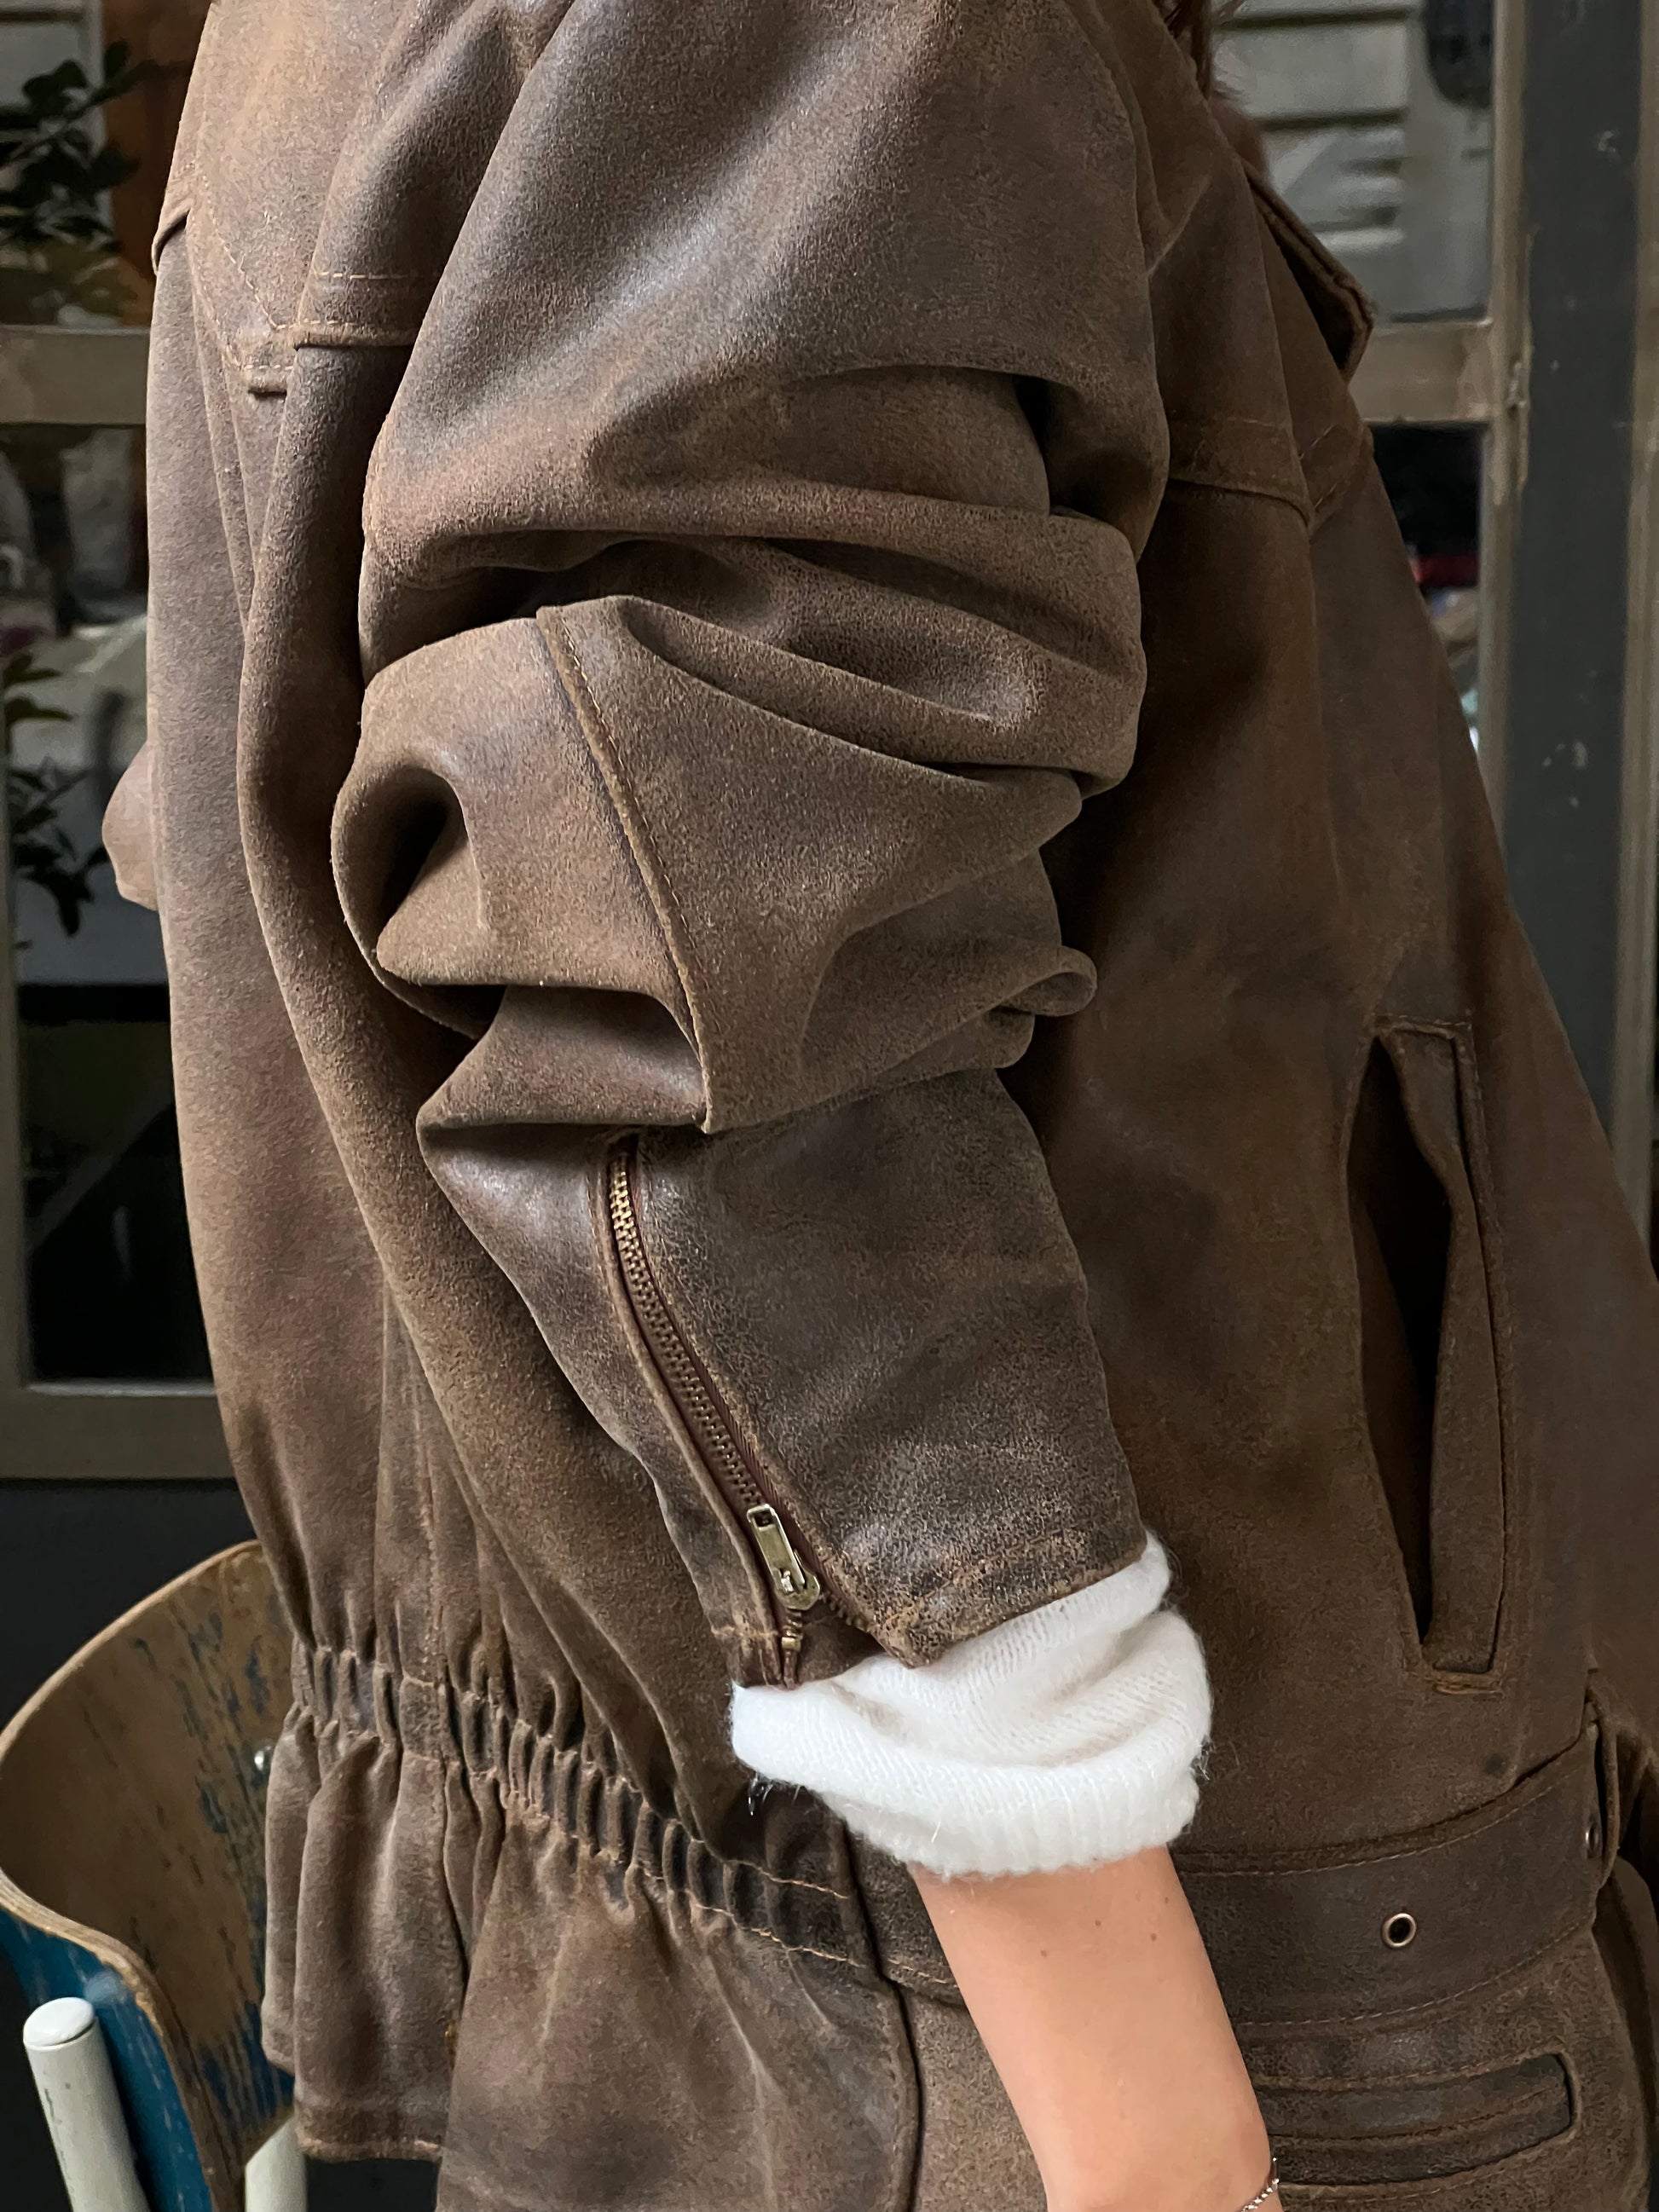 woman wearing a brown woman’s bike leather jacket sleeve